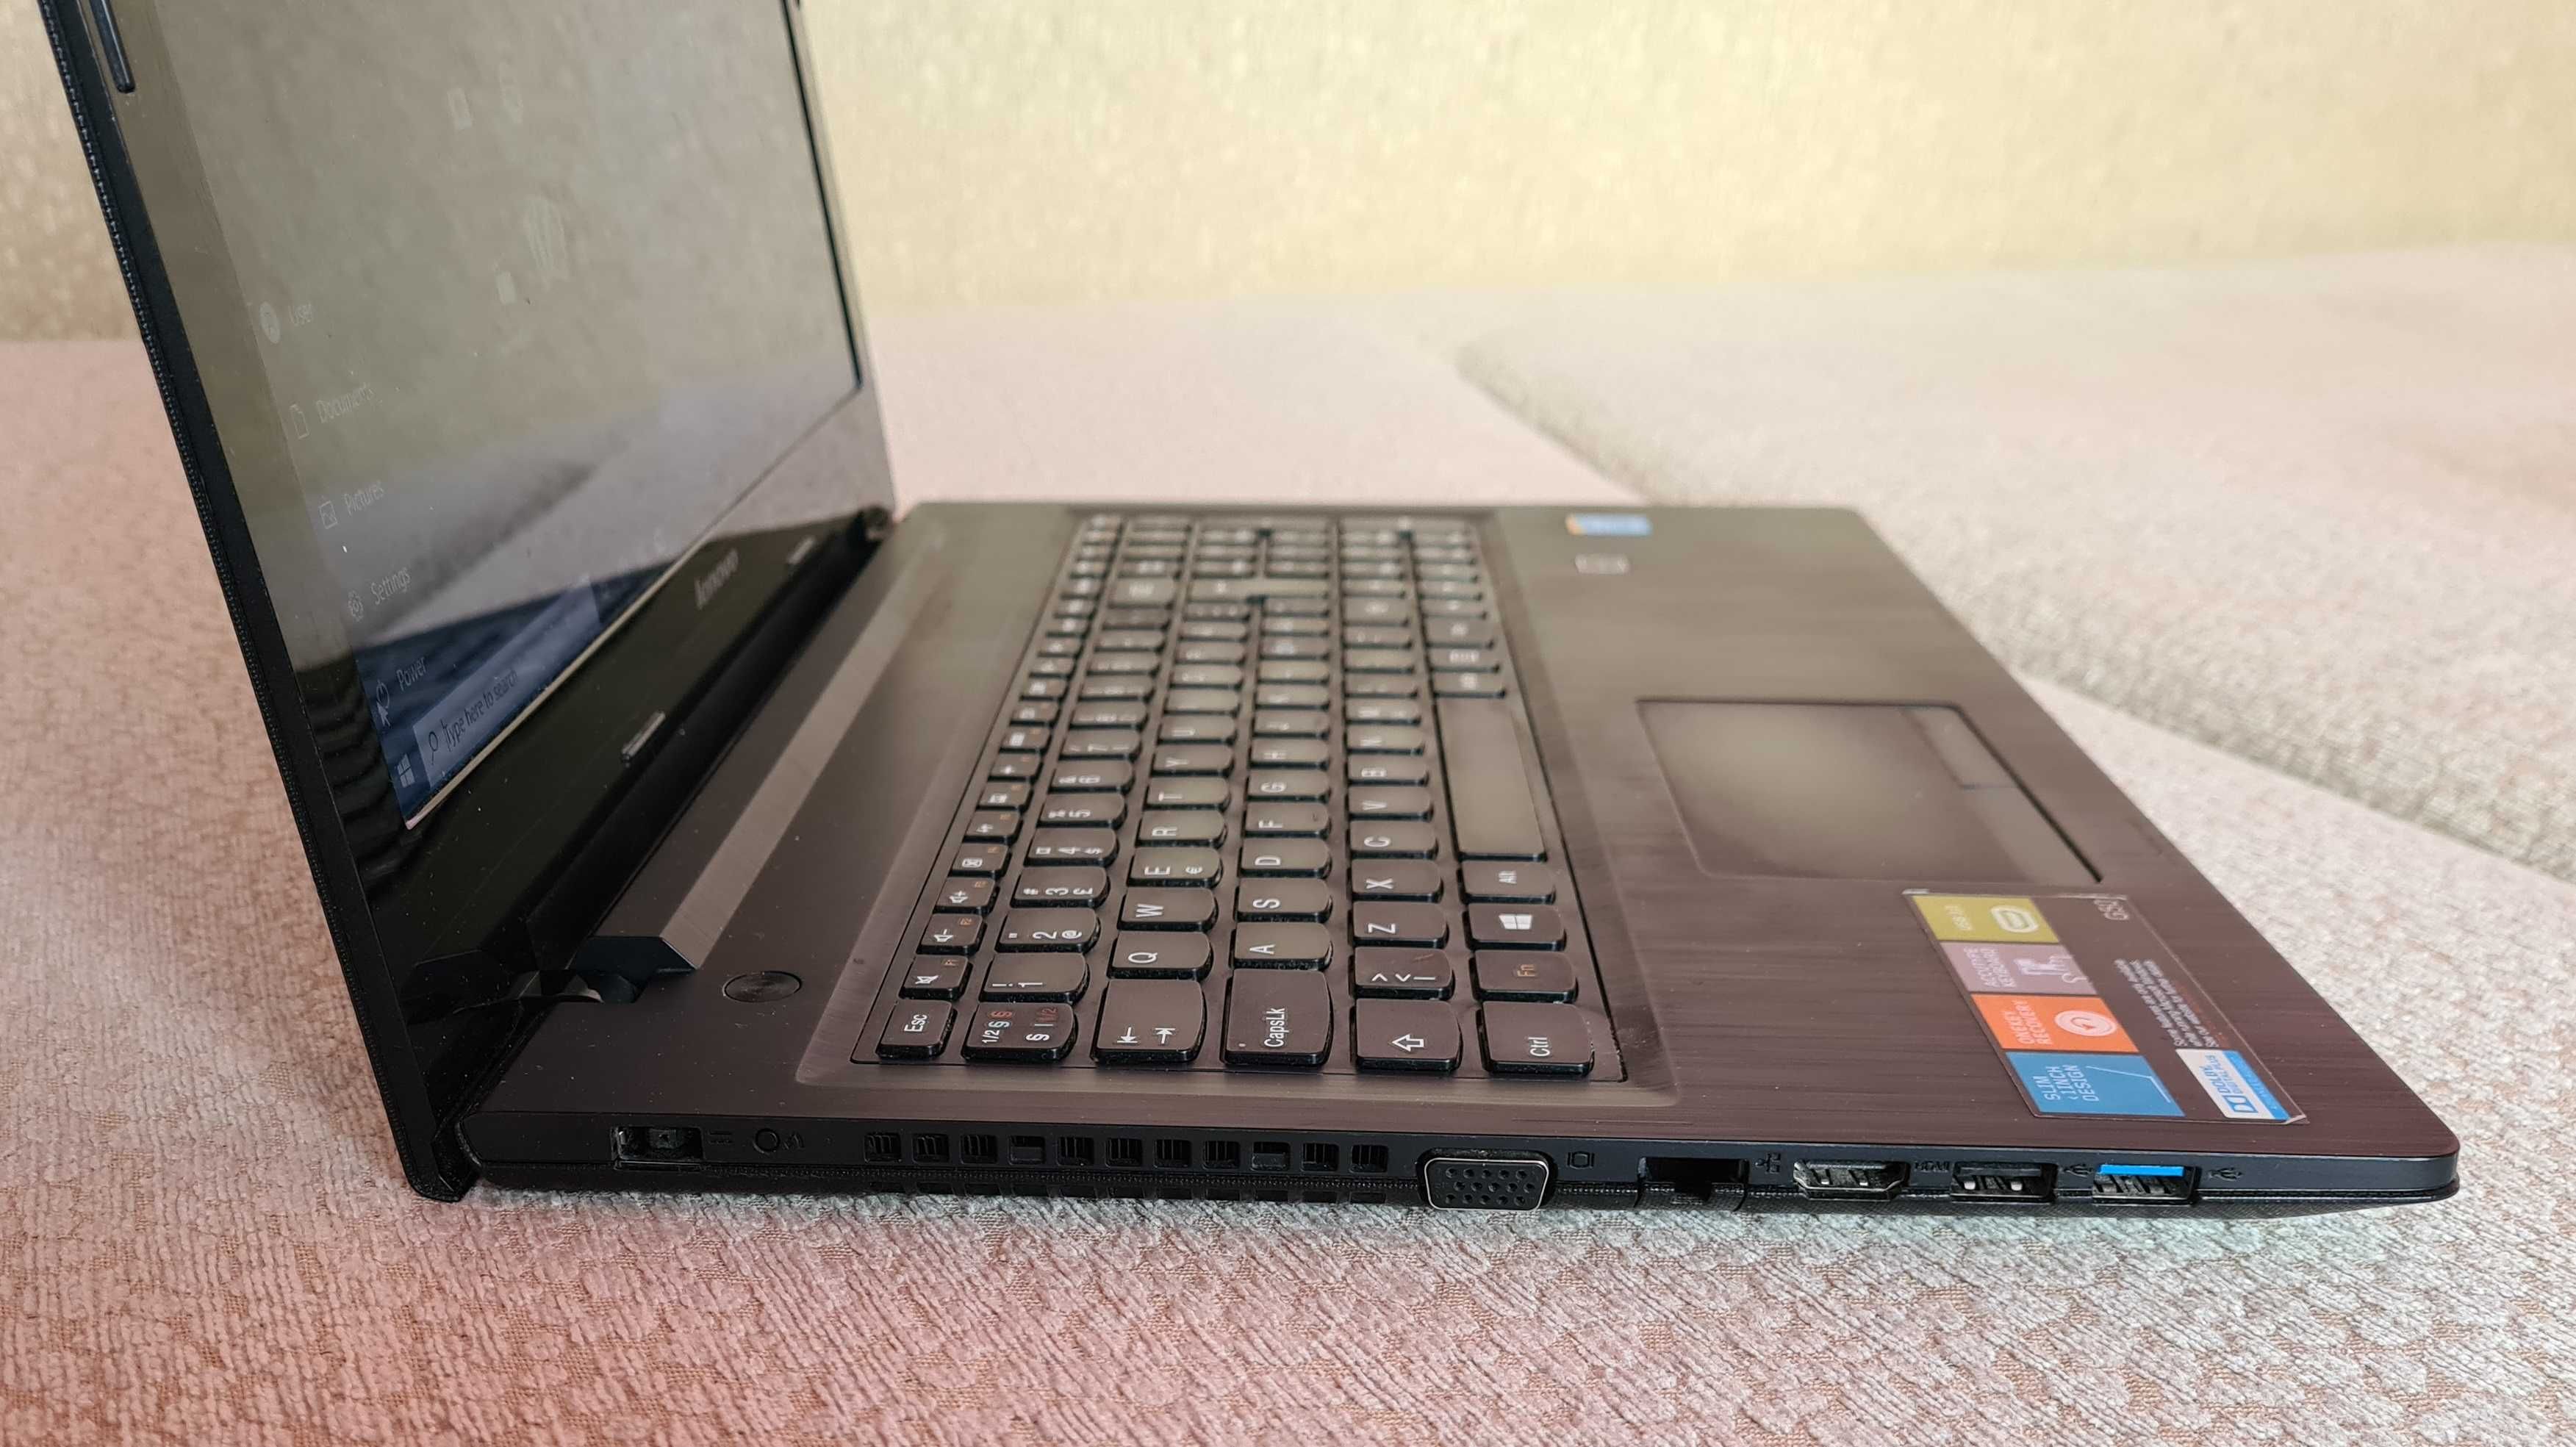 Laptop Lenovo Z50 15.6", i7-4510u, 8 GB RAM, SSD 240 GB, bateria 2h